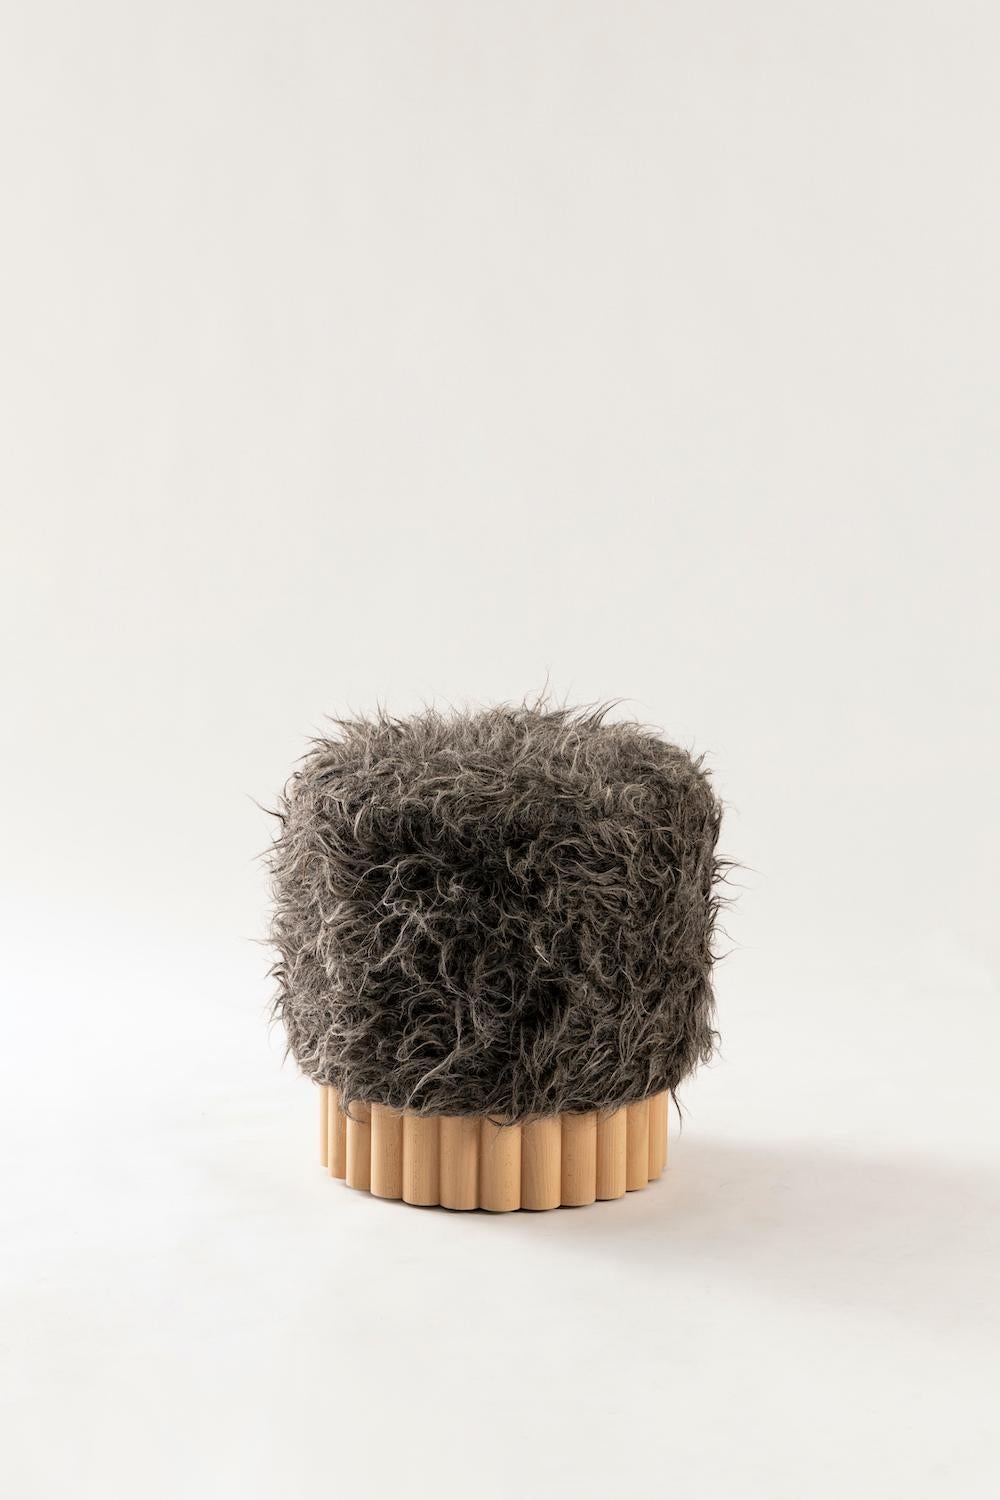 Minimalist LOTO Pouf in Gray Long Pile Shag Wool by Peca For Sale